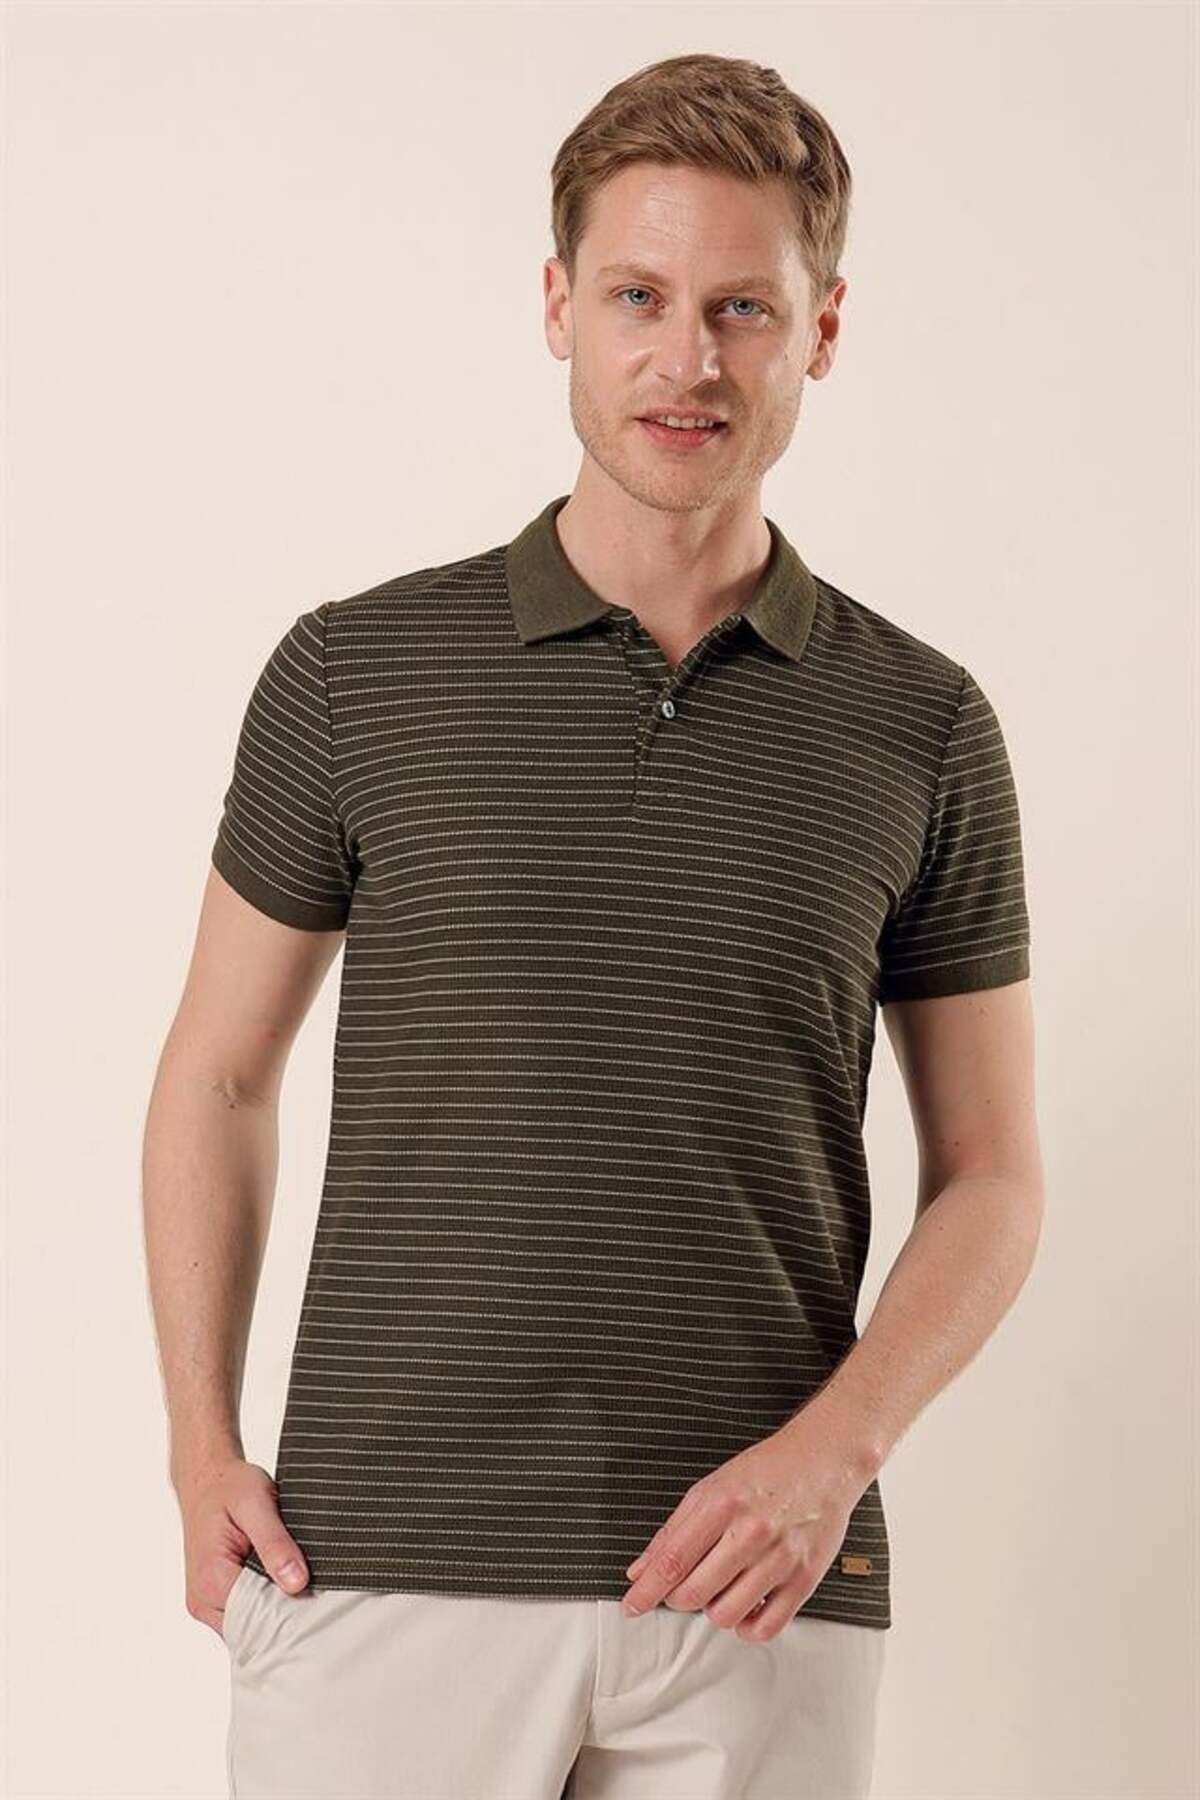 İmza Koyu Haki Kısa Kollu Çizgili Armürlü Polo Yaka Casual Slim Fit Dar Kesim T-shirt 1011230164